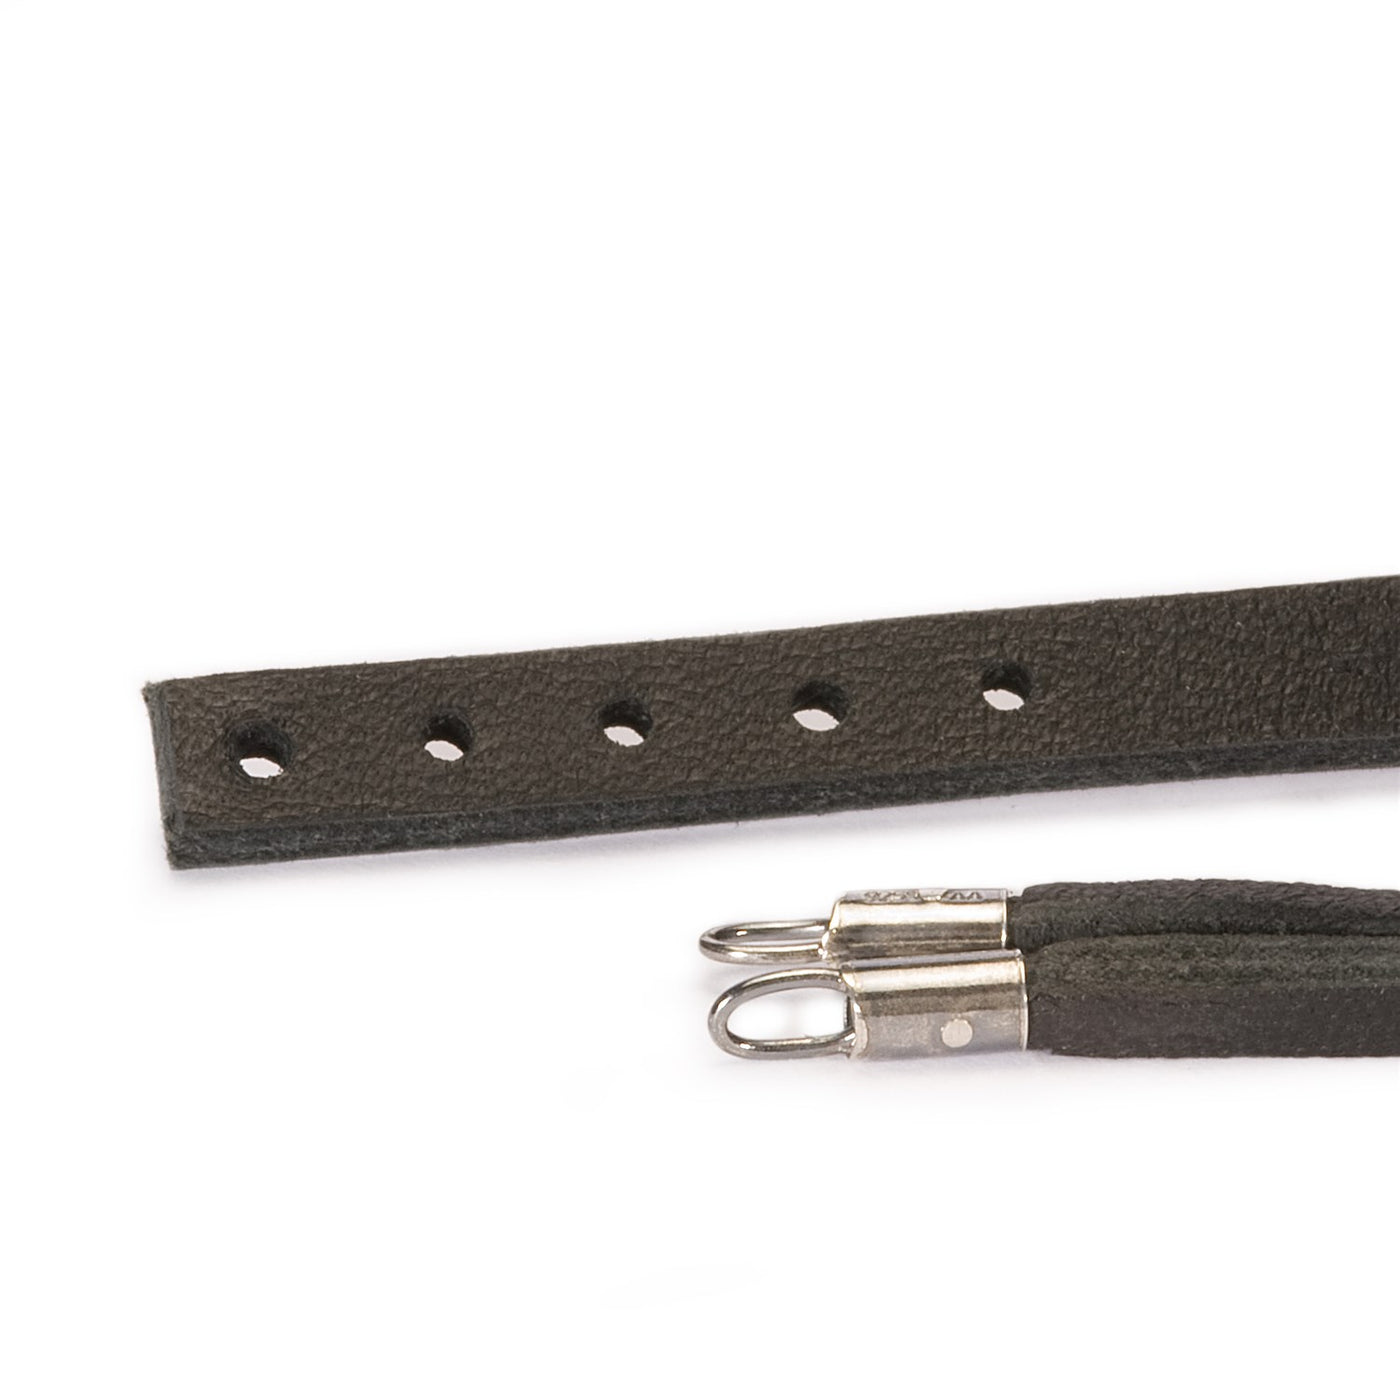 Leather Bracelet Black/Silver